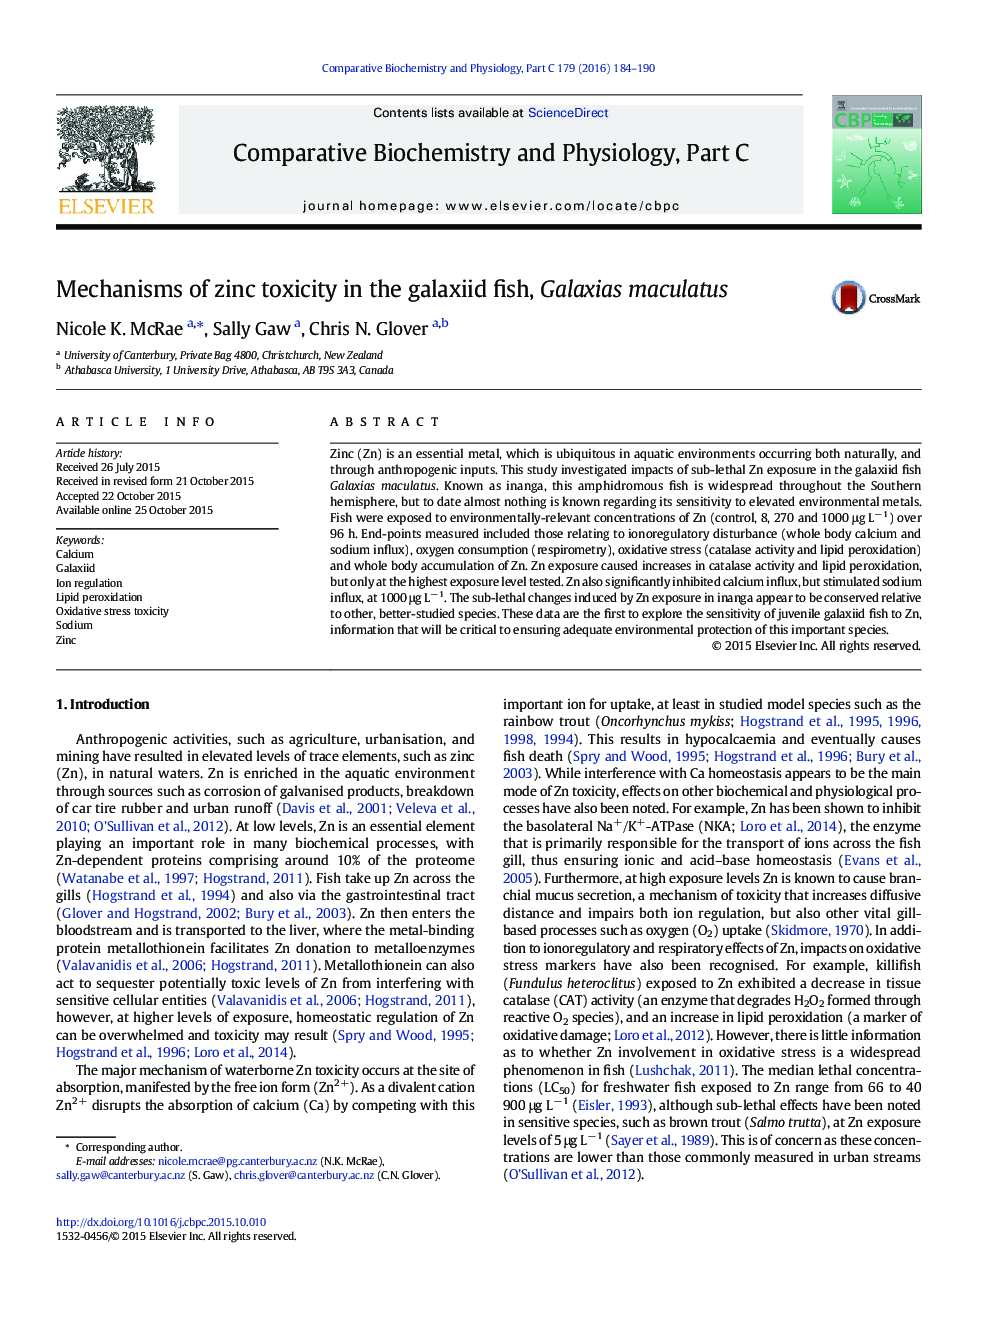 Mechanisms of zinc toxicity in the galaxiid fish, Galaxias maculatus